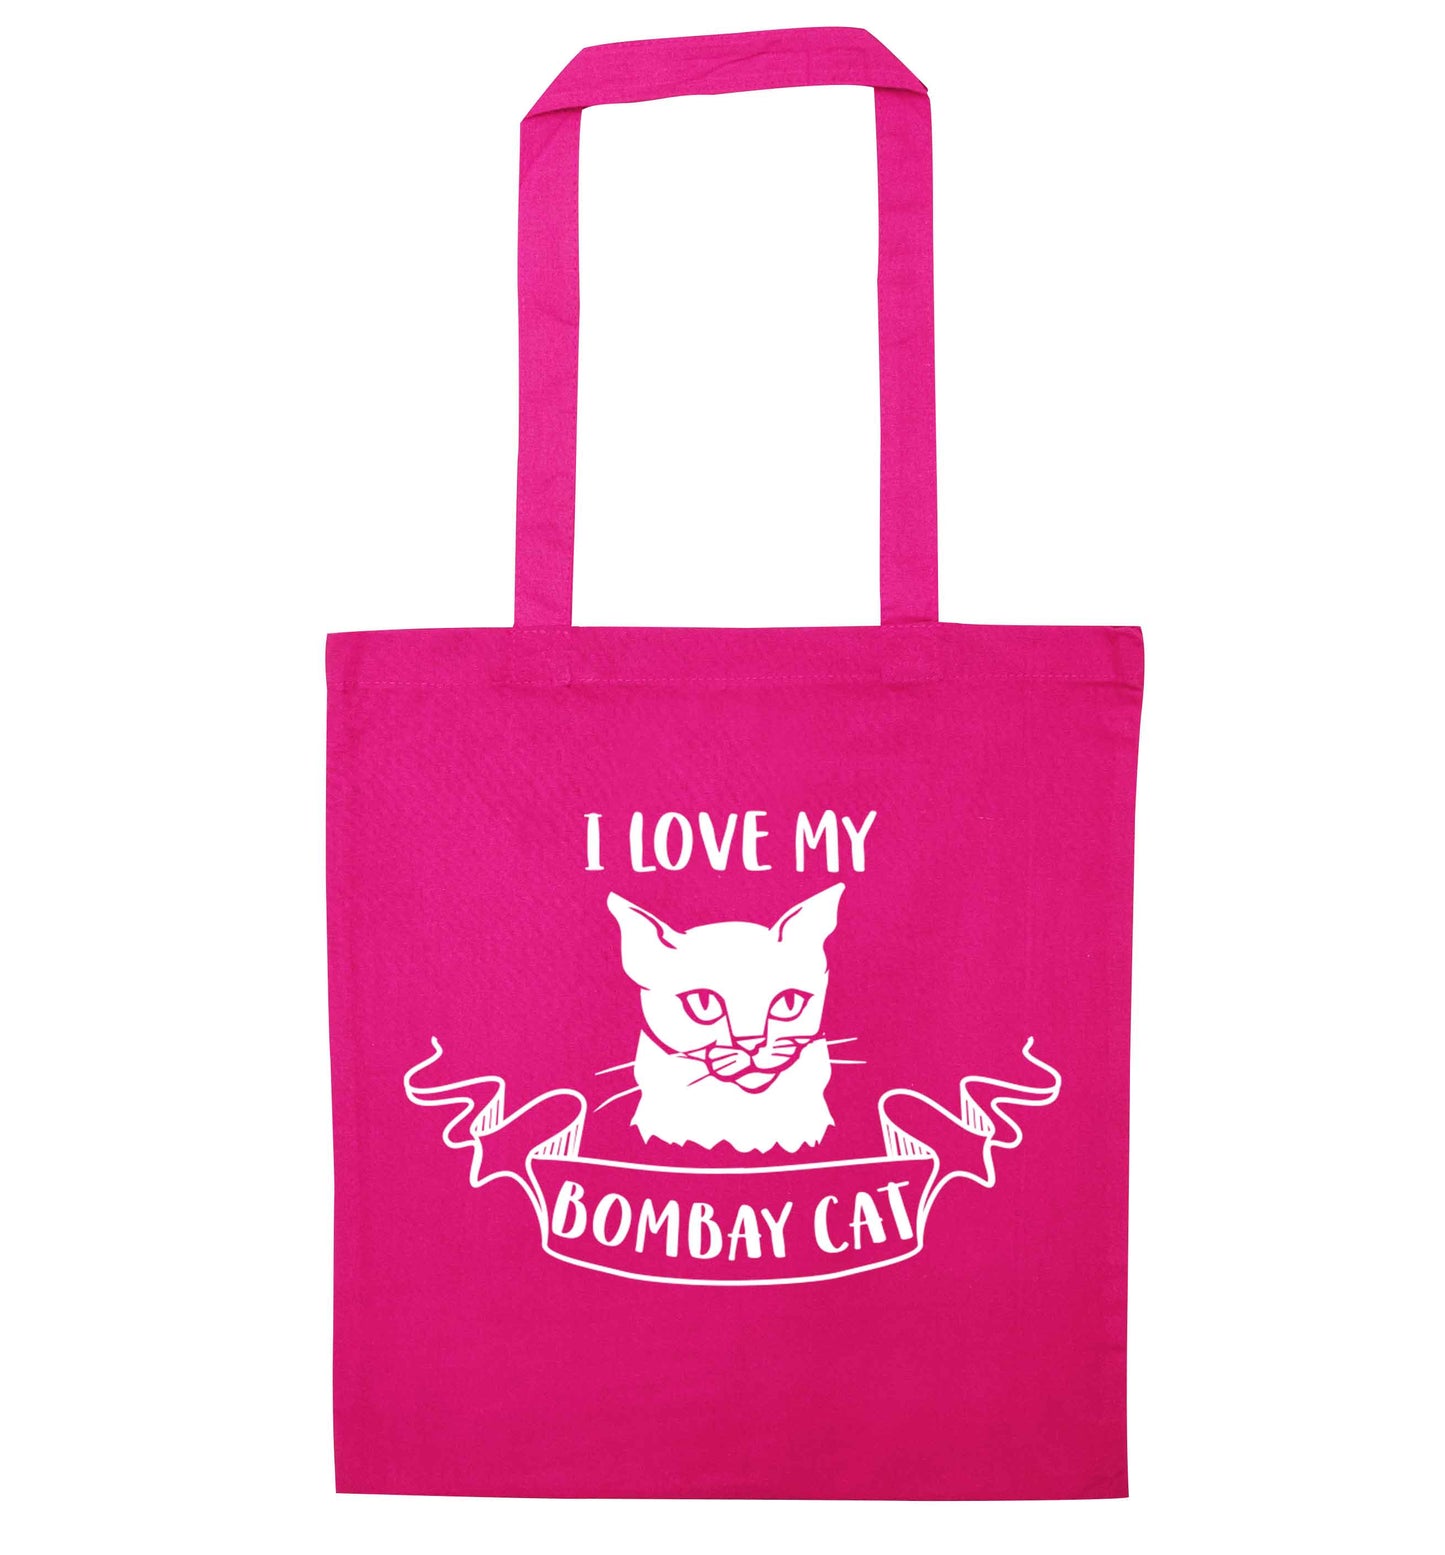 I love my bombay cat pink tote bag